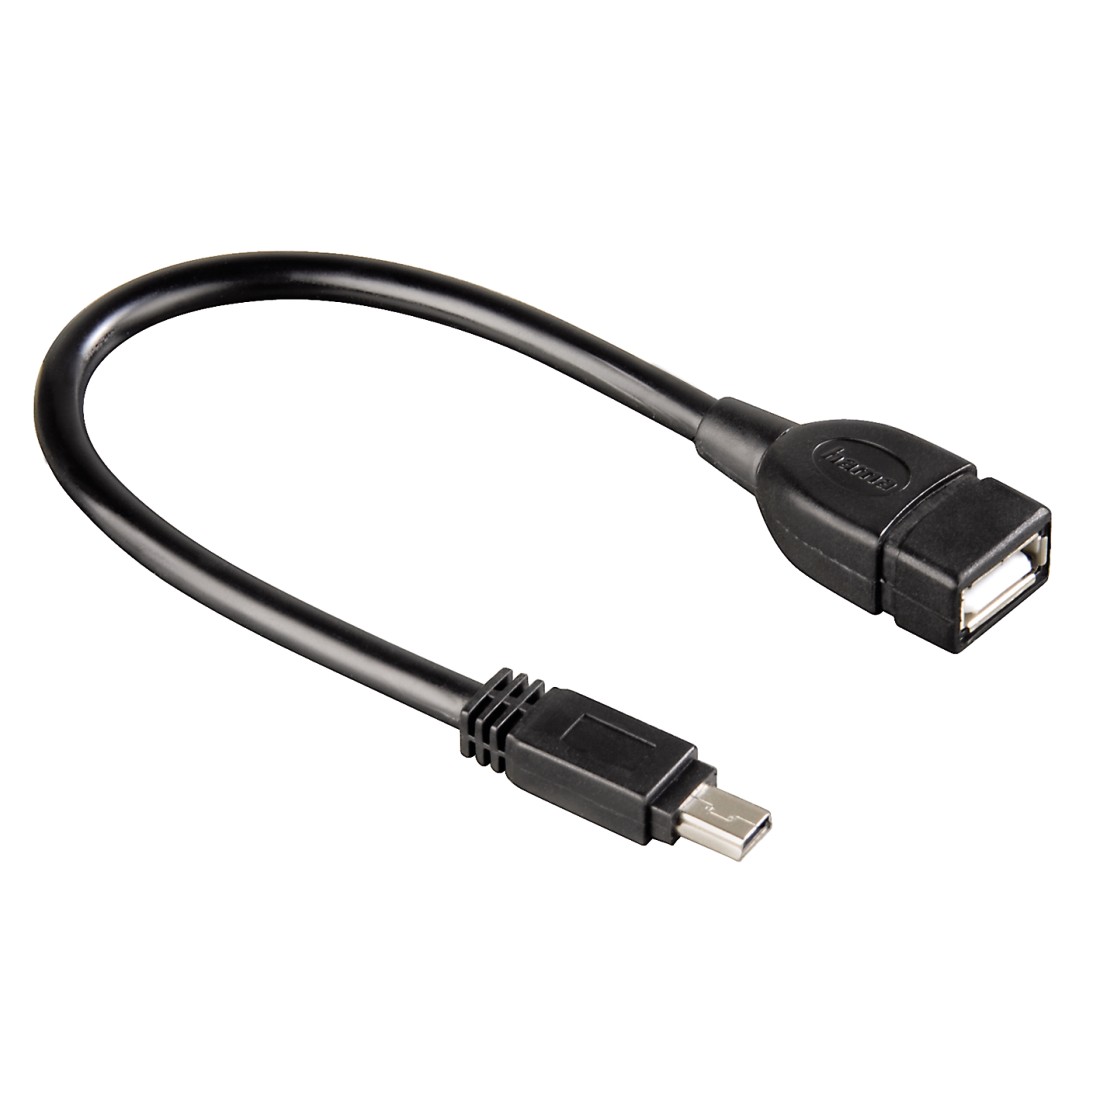 00107201 Hama USB Adapter Cable, mini B plug - A socket, 10 cm